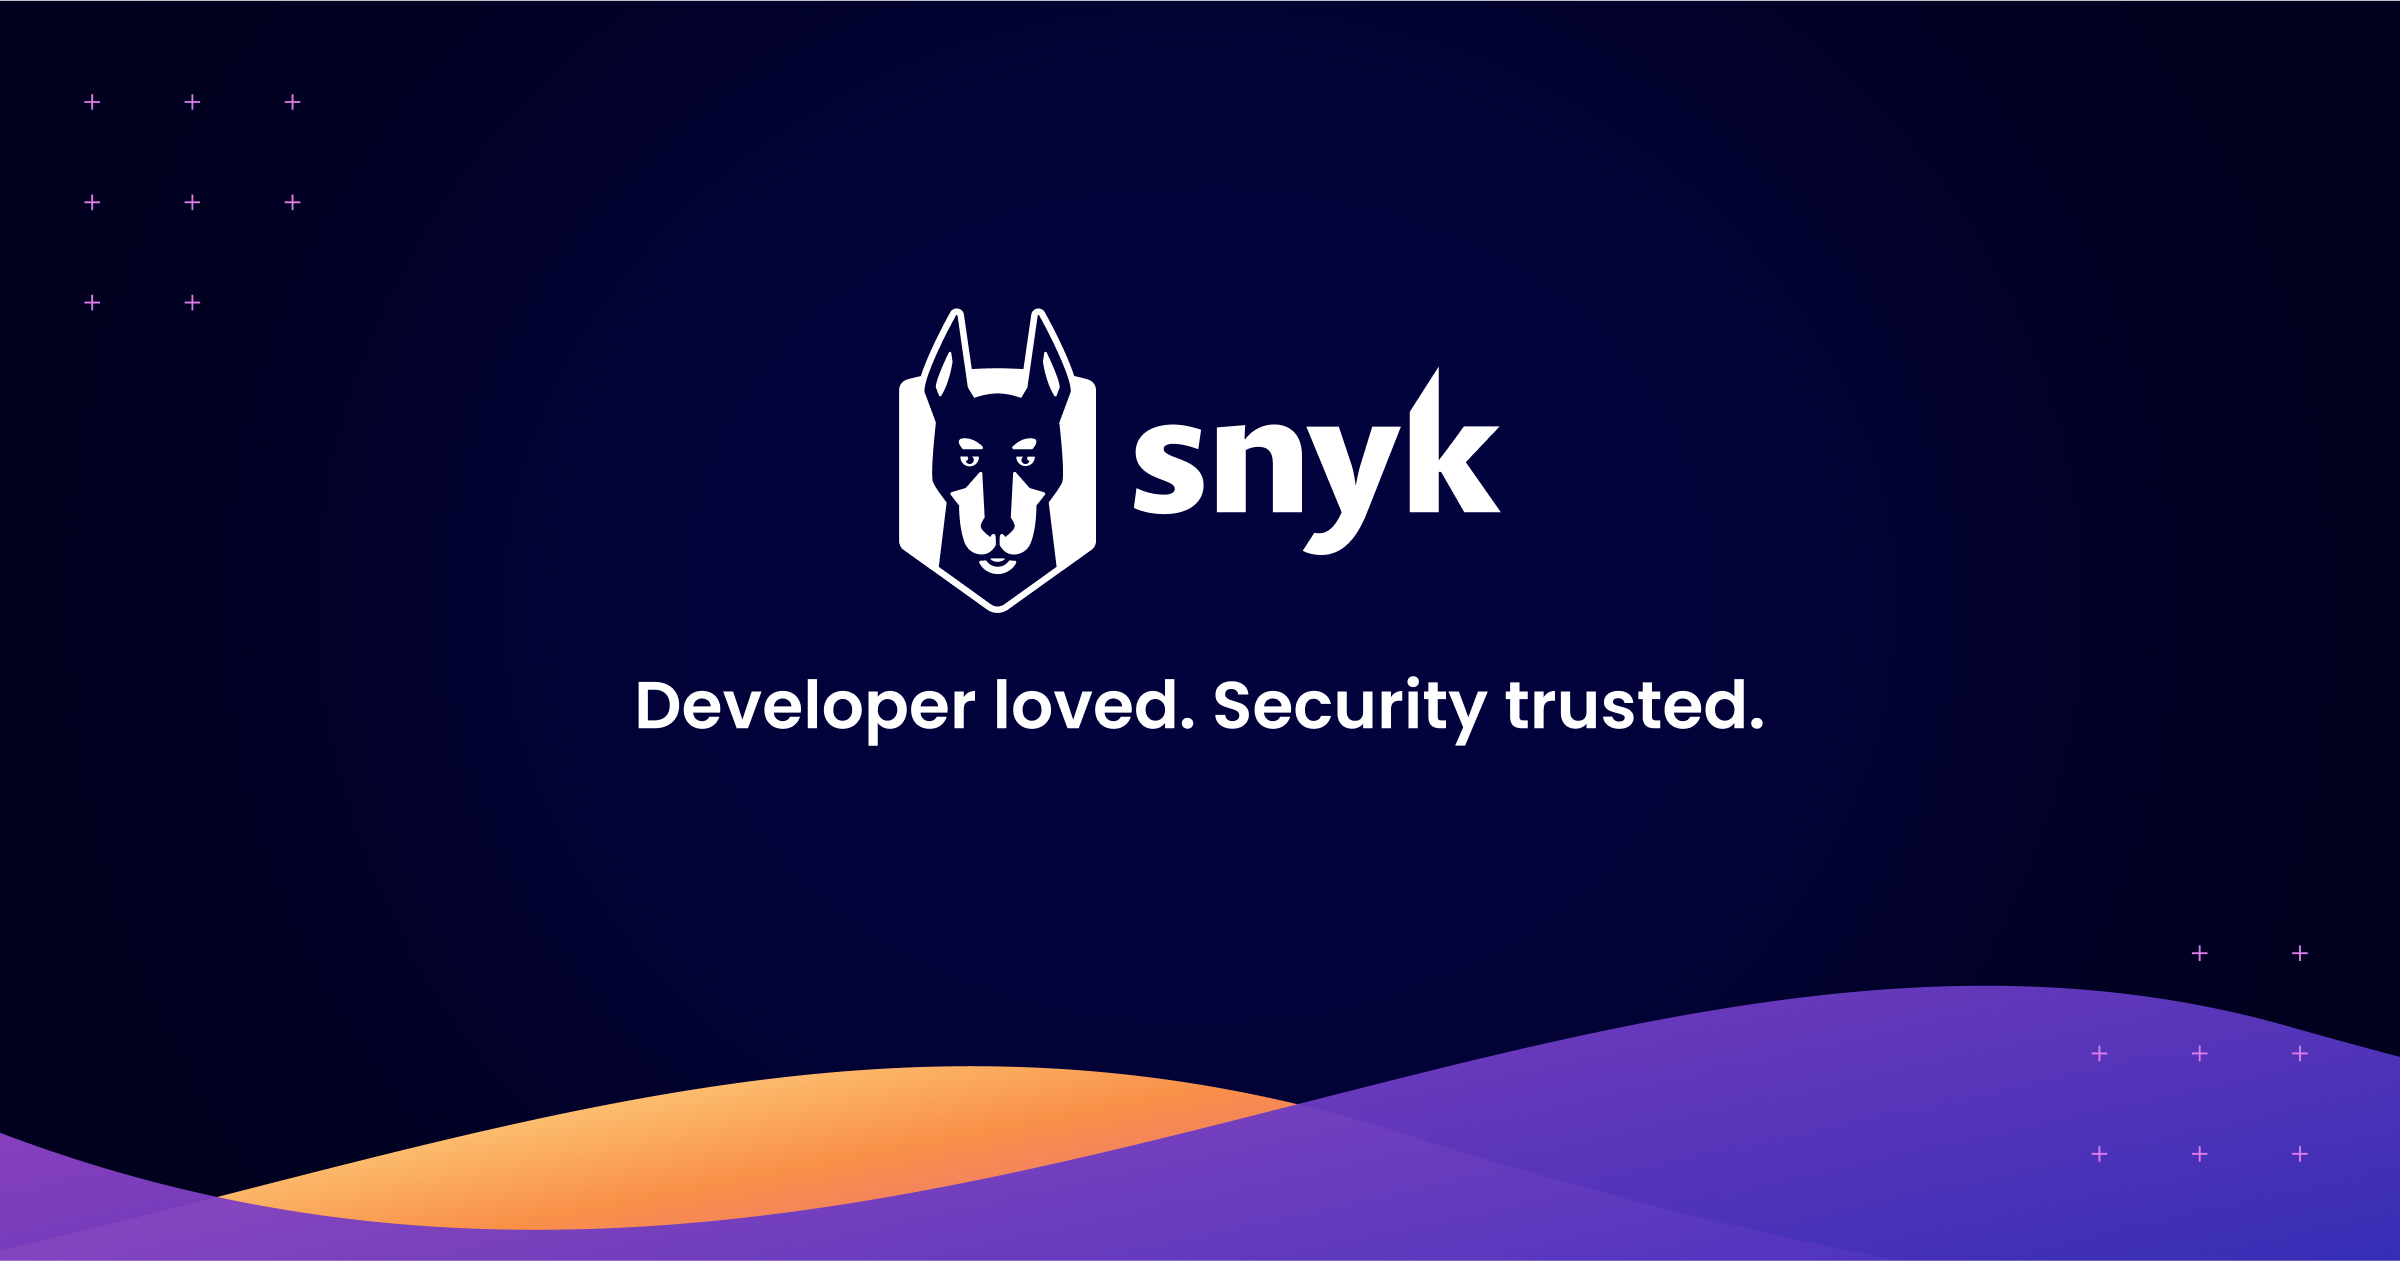 Developer security | Snyk